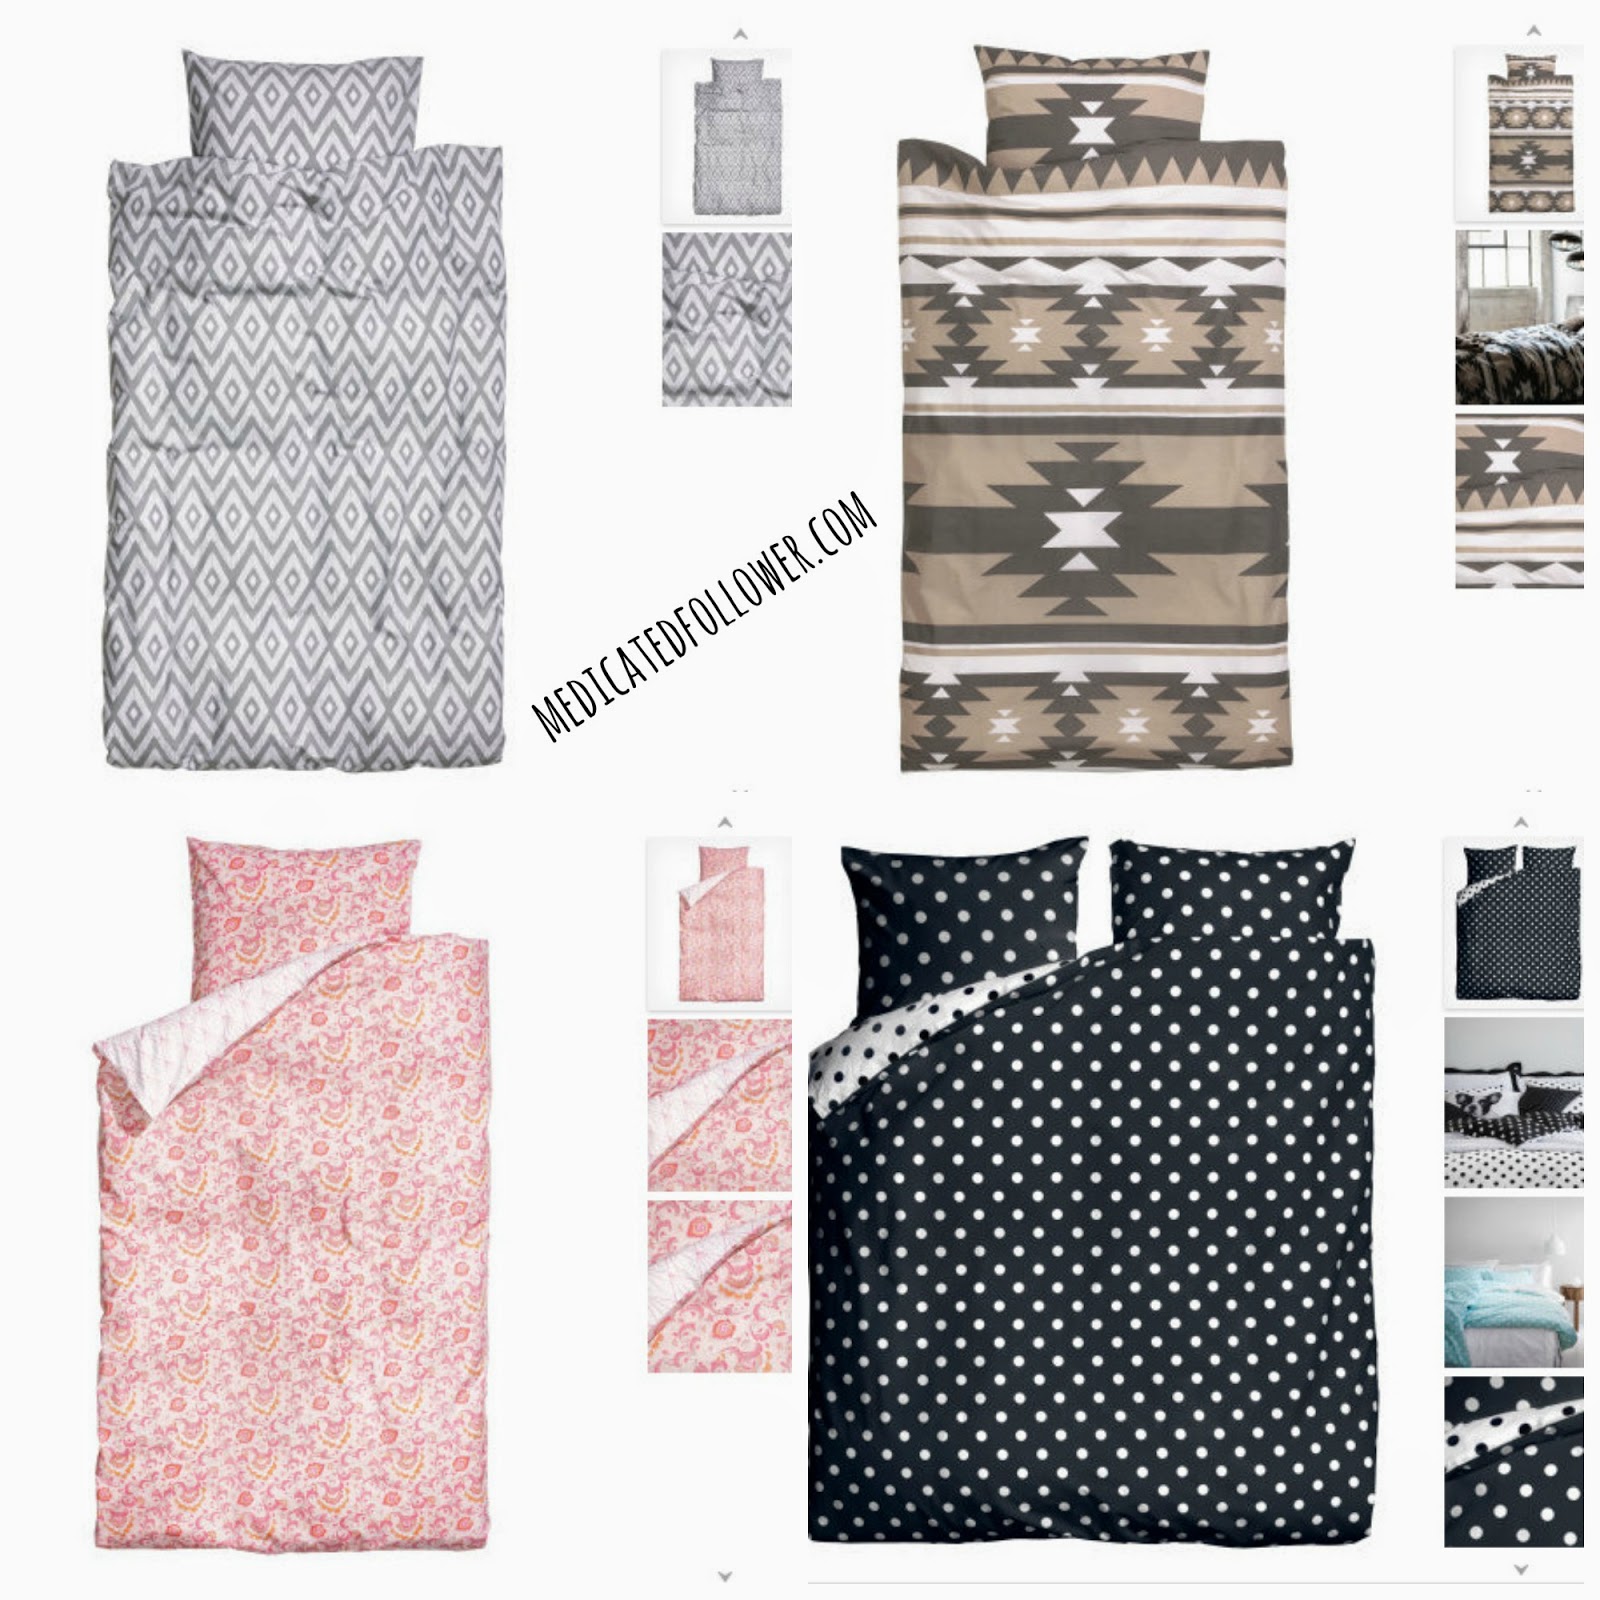 H&M Bedding, duvet covers, trendy, monochrome, Aztec, geometric